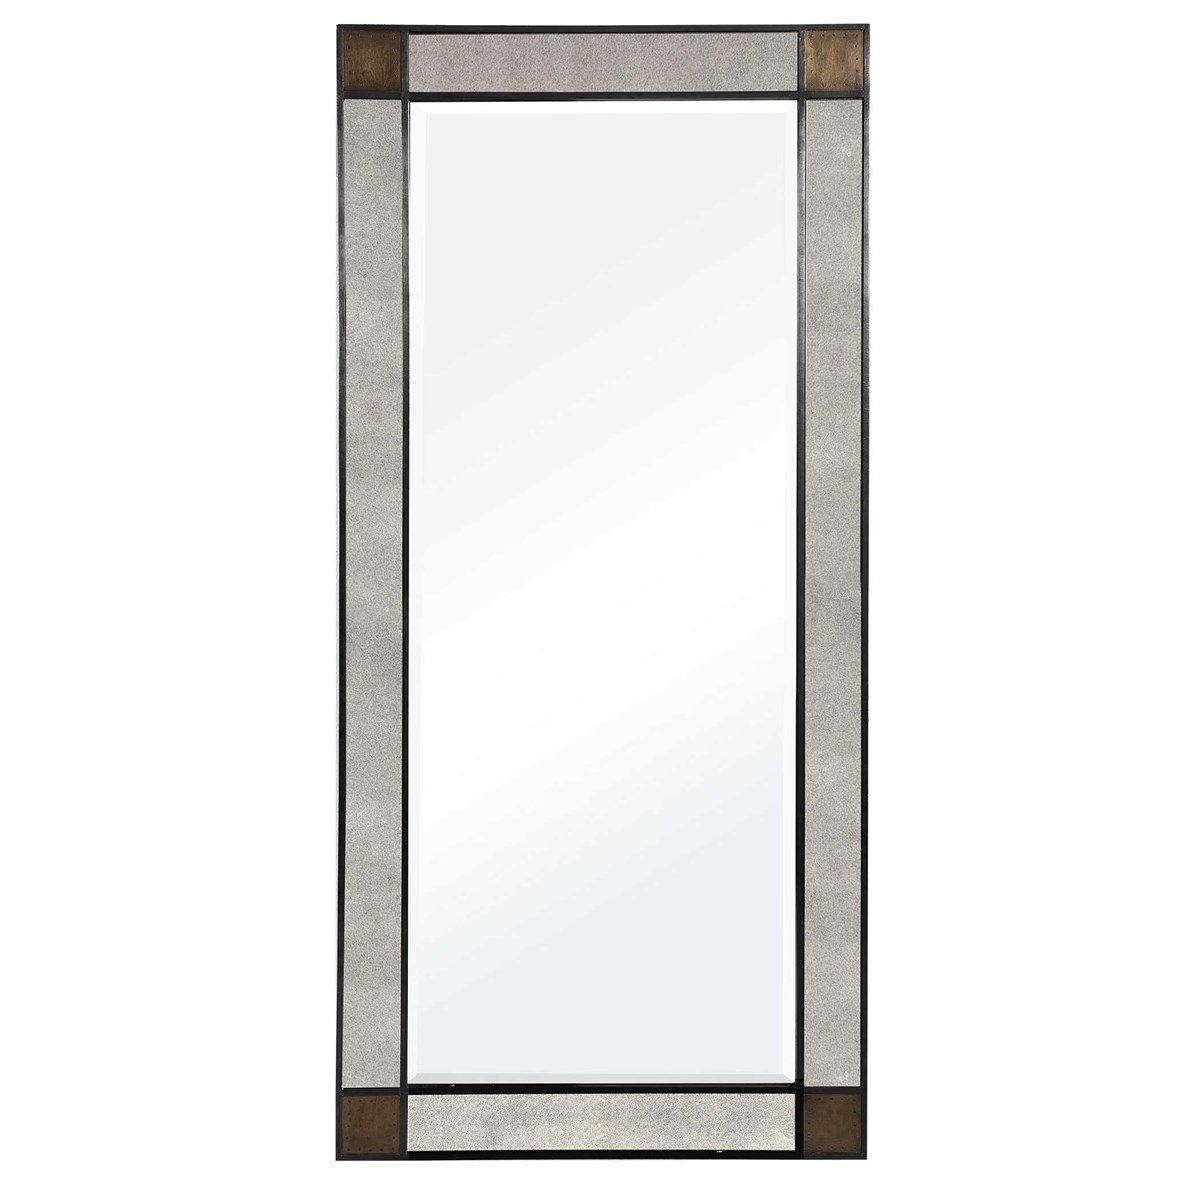 Newcomb Mirror - Image 0